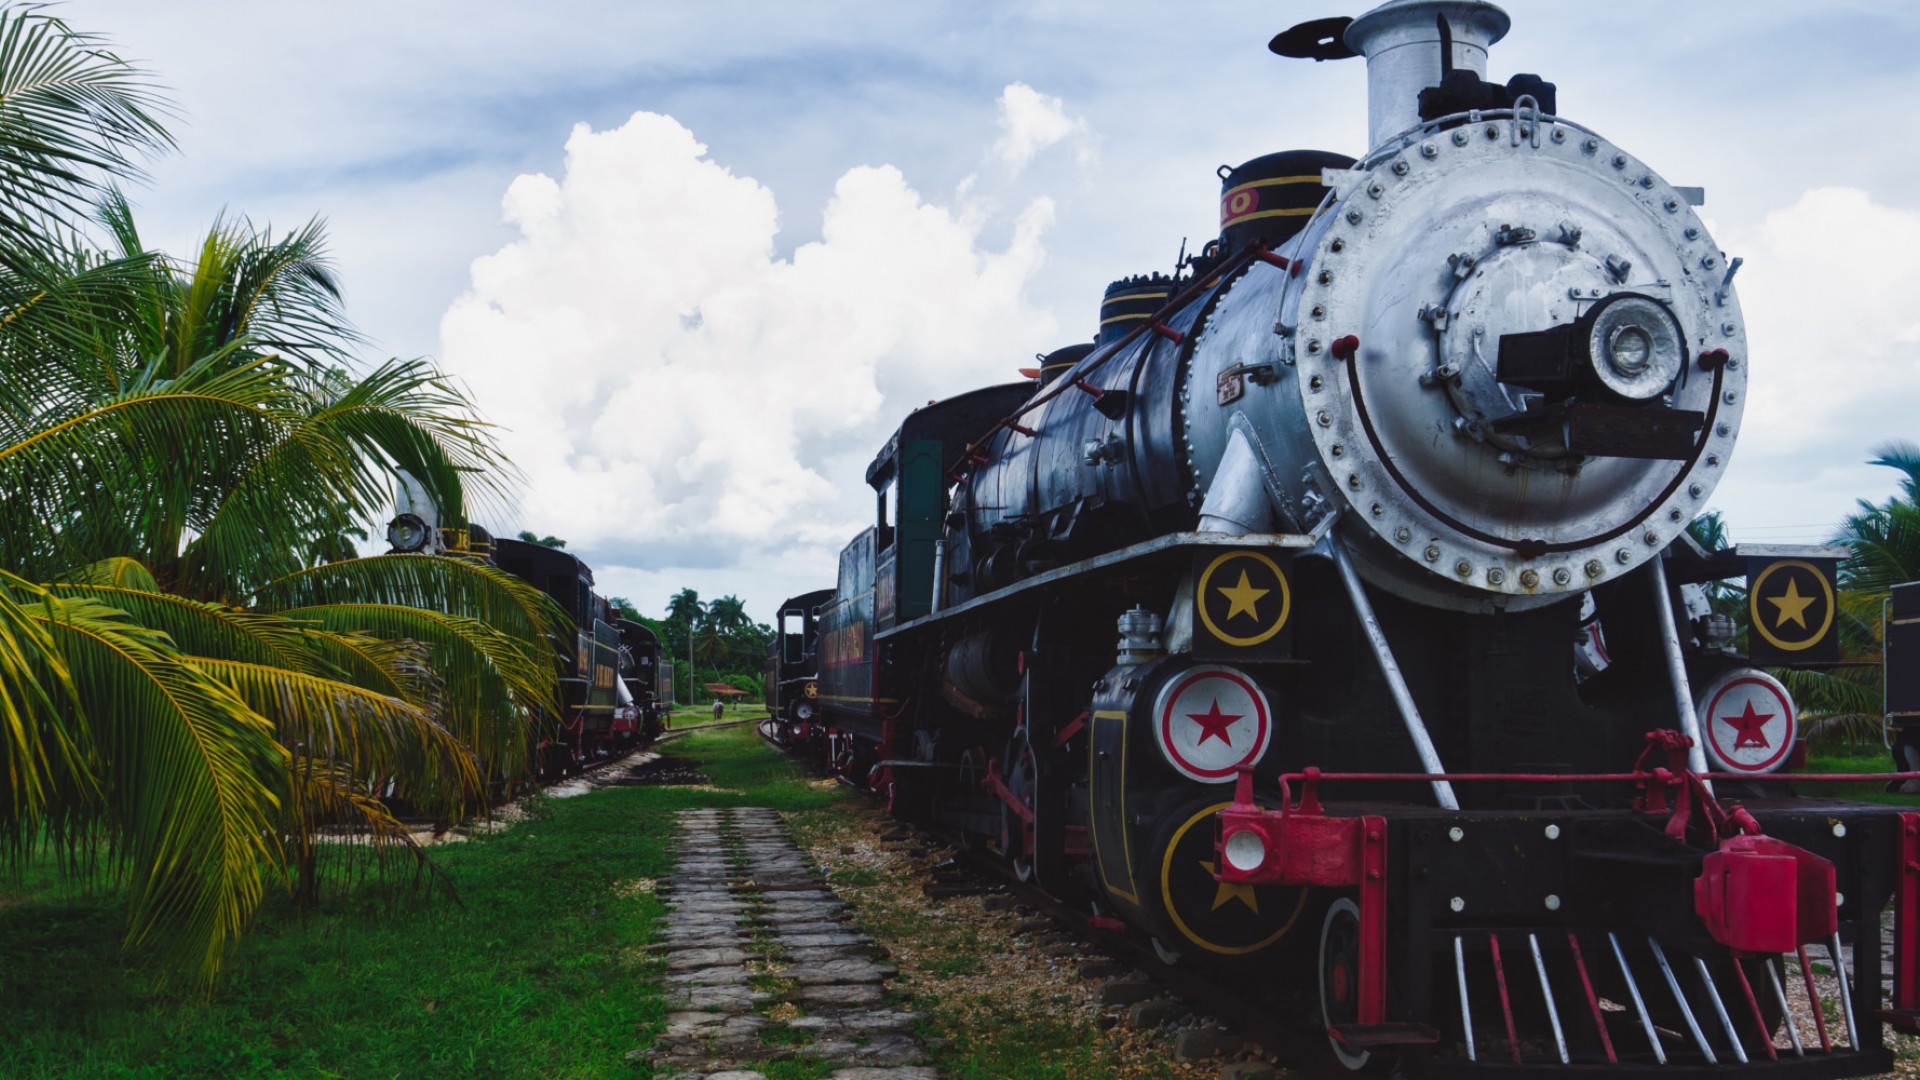 sugar train on tracks in Cuba